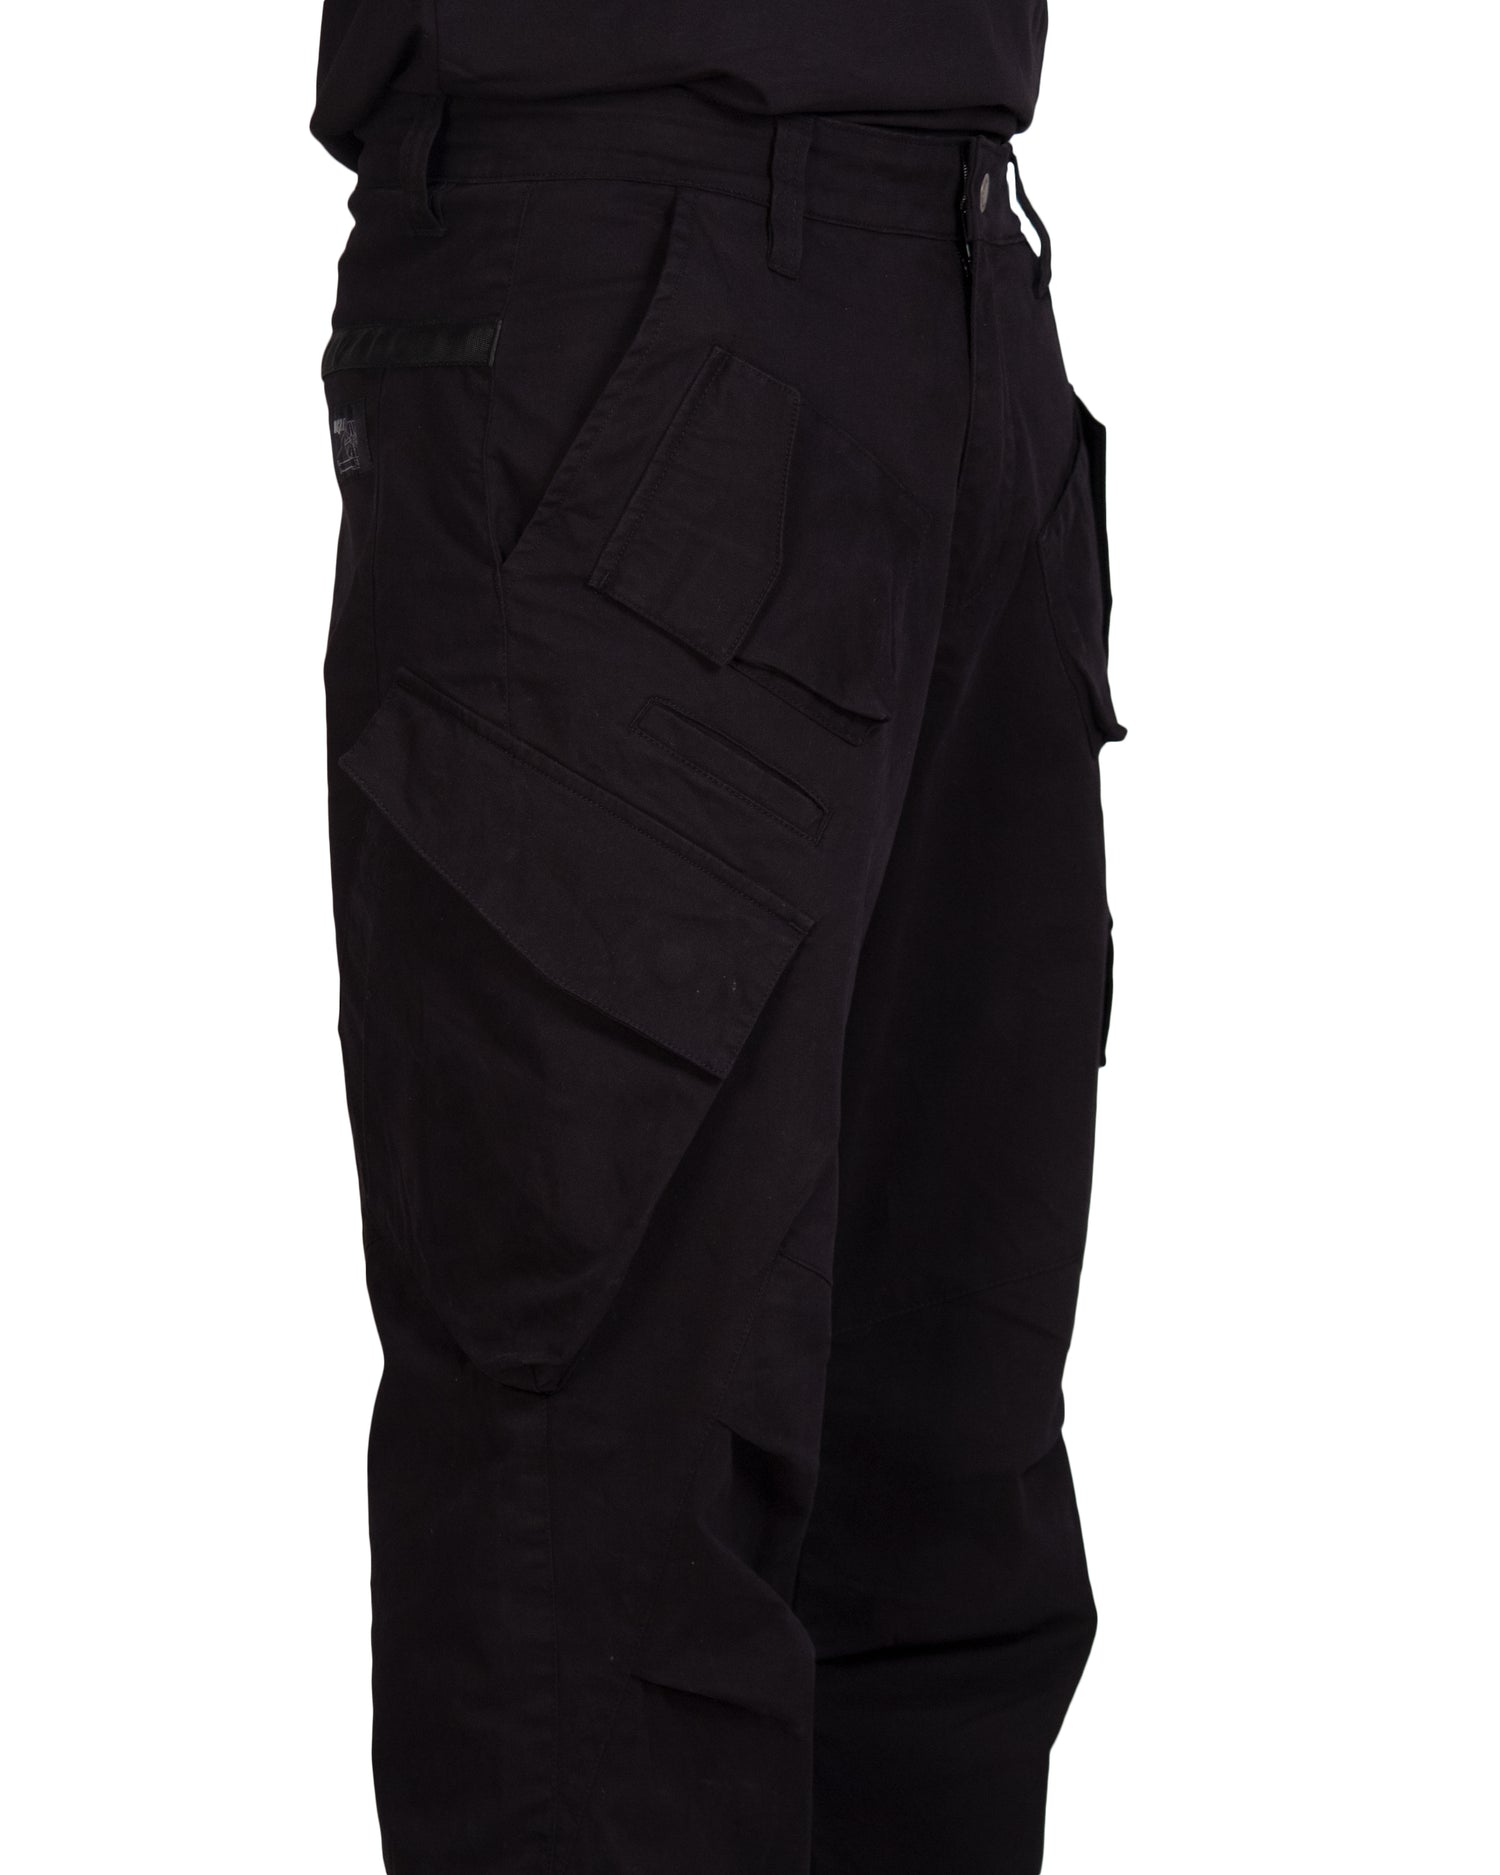 Hexa Pocket Pants (Black)